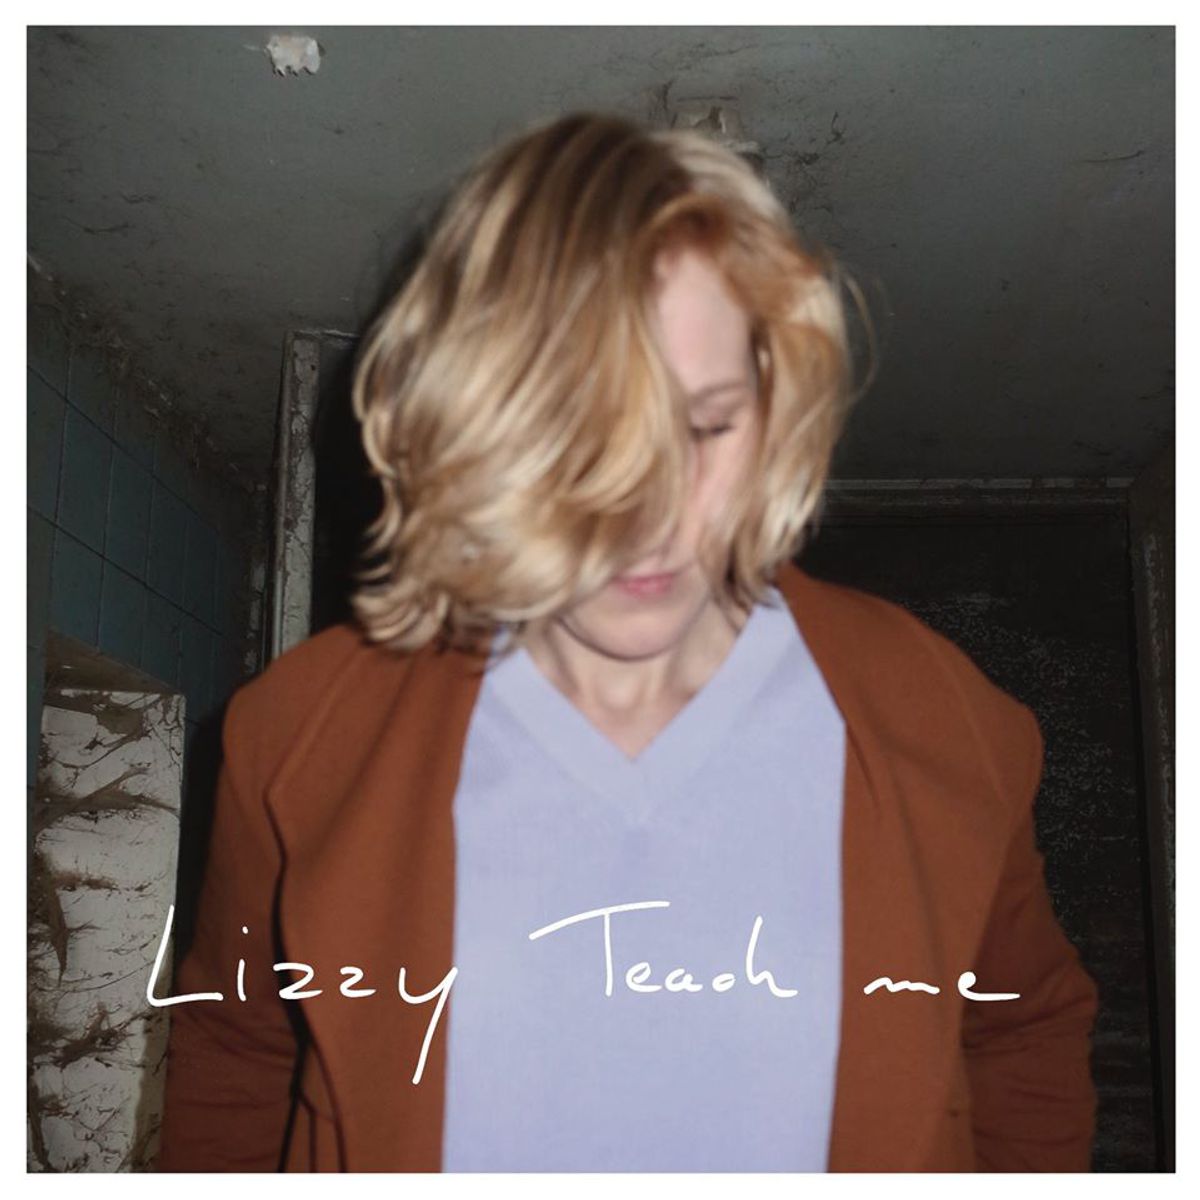 Lizzy - Teach Me